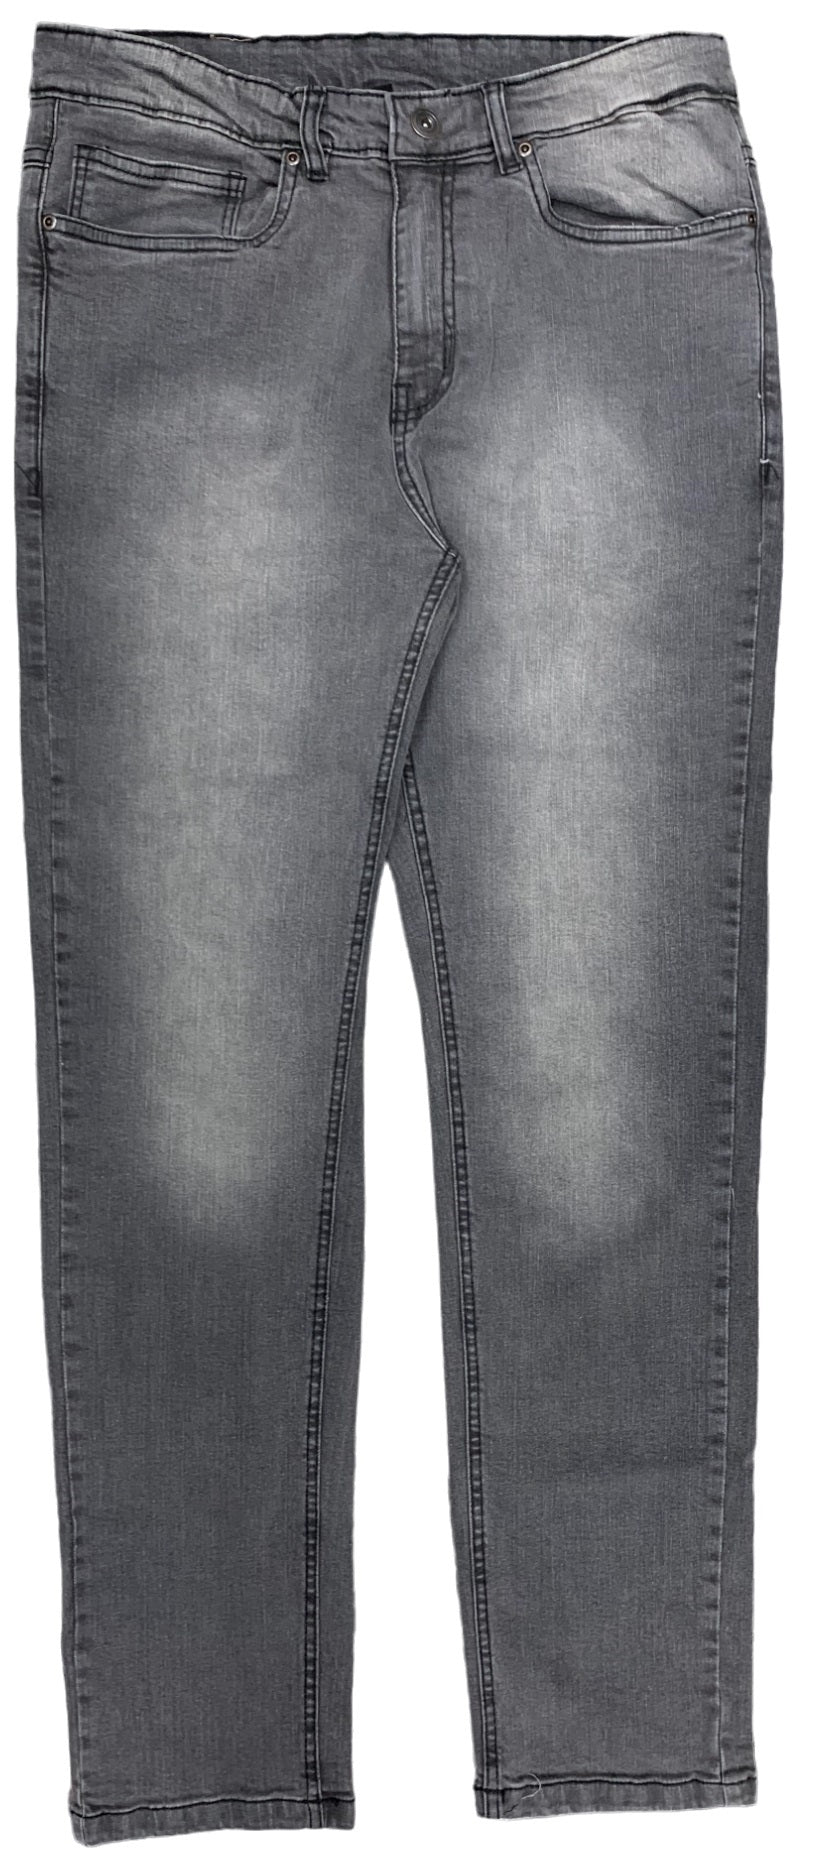 Men's Flex Straight cut Classic Denim Jeans